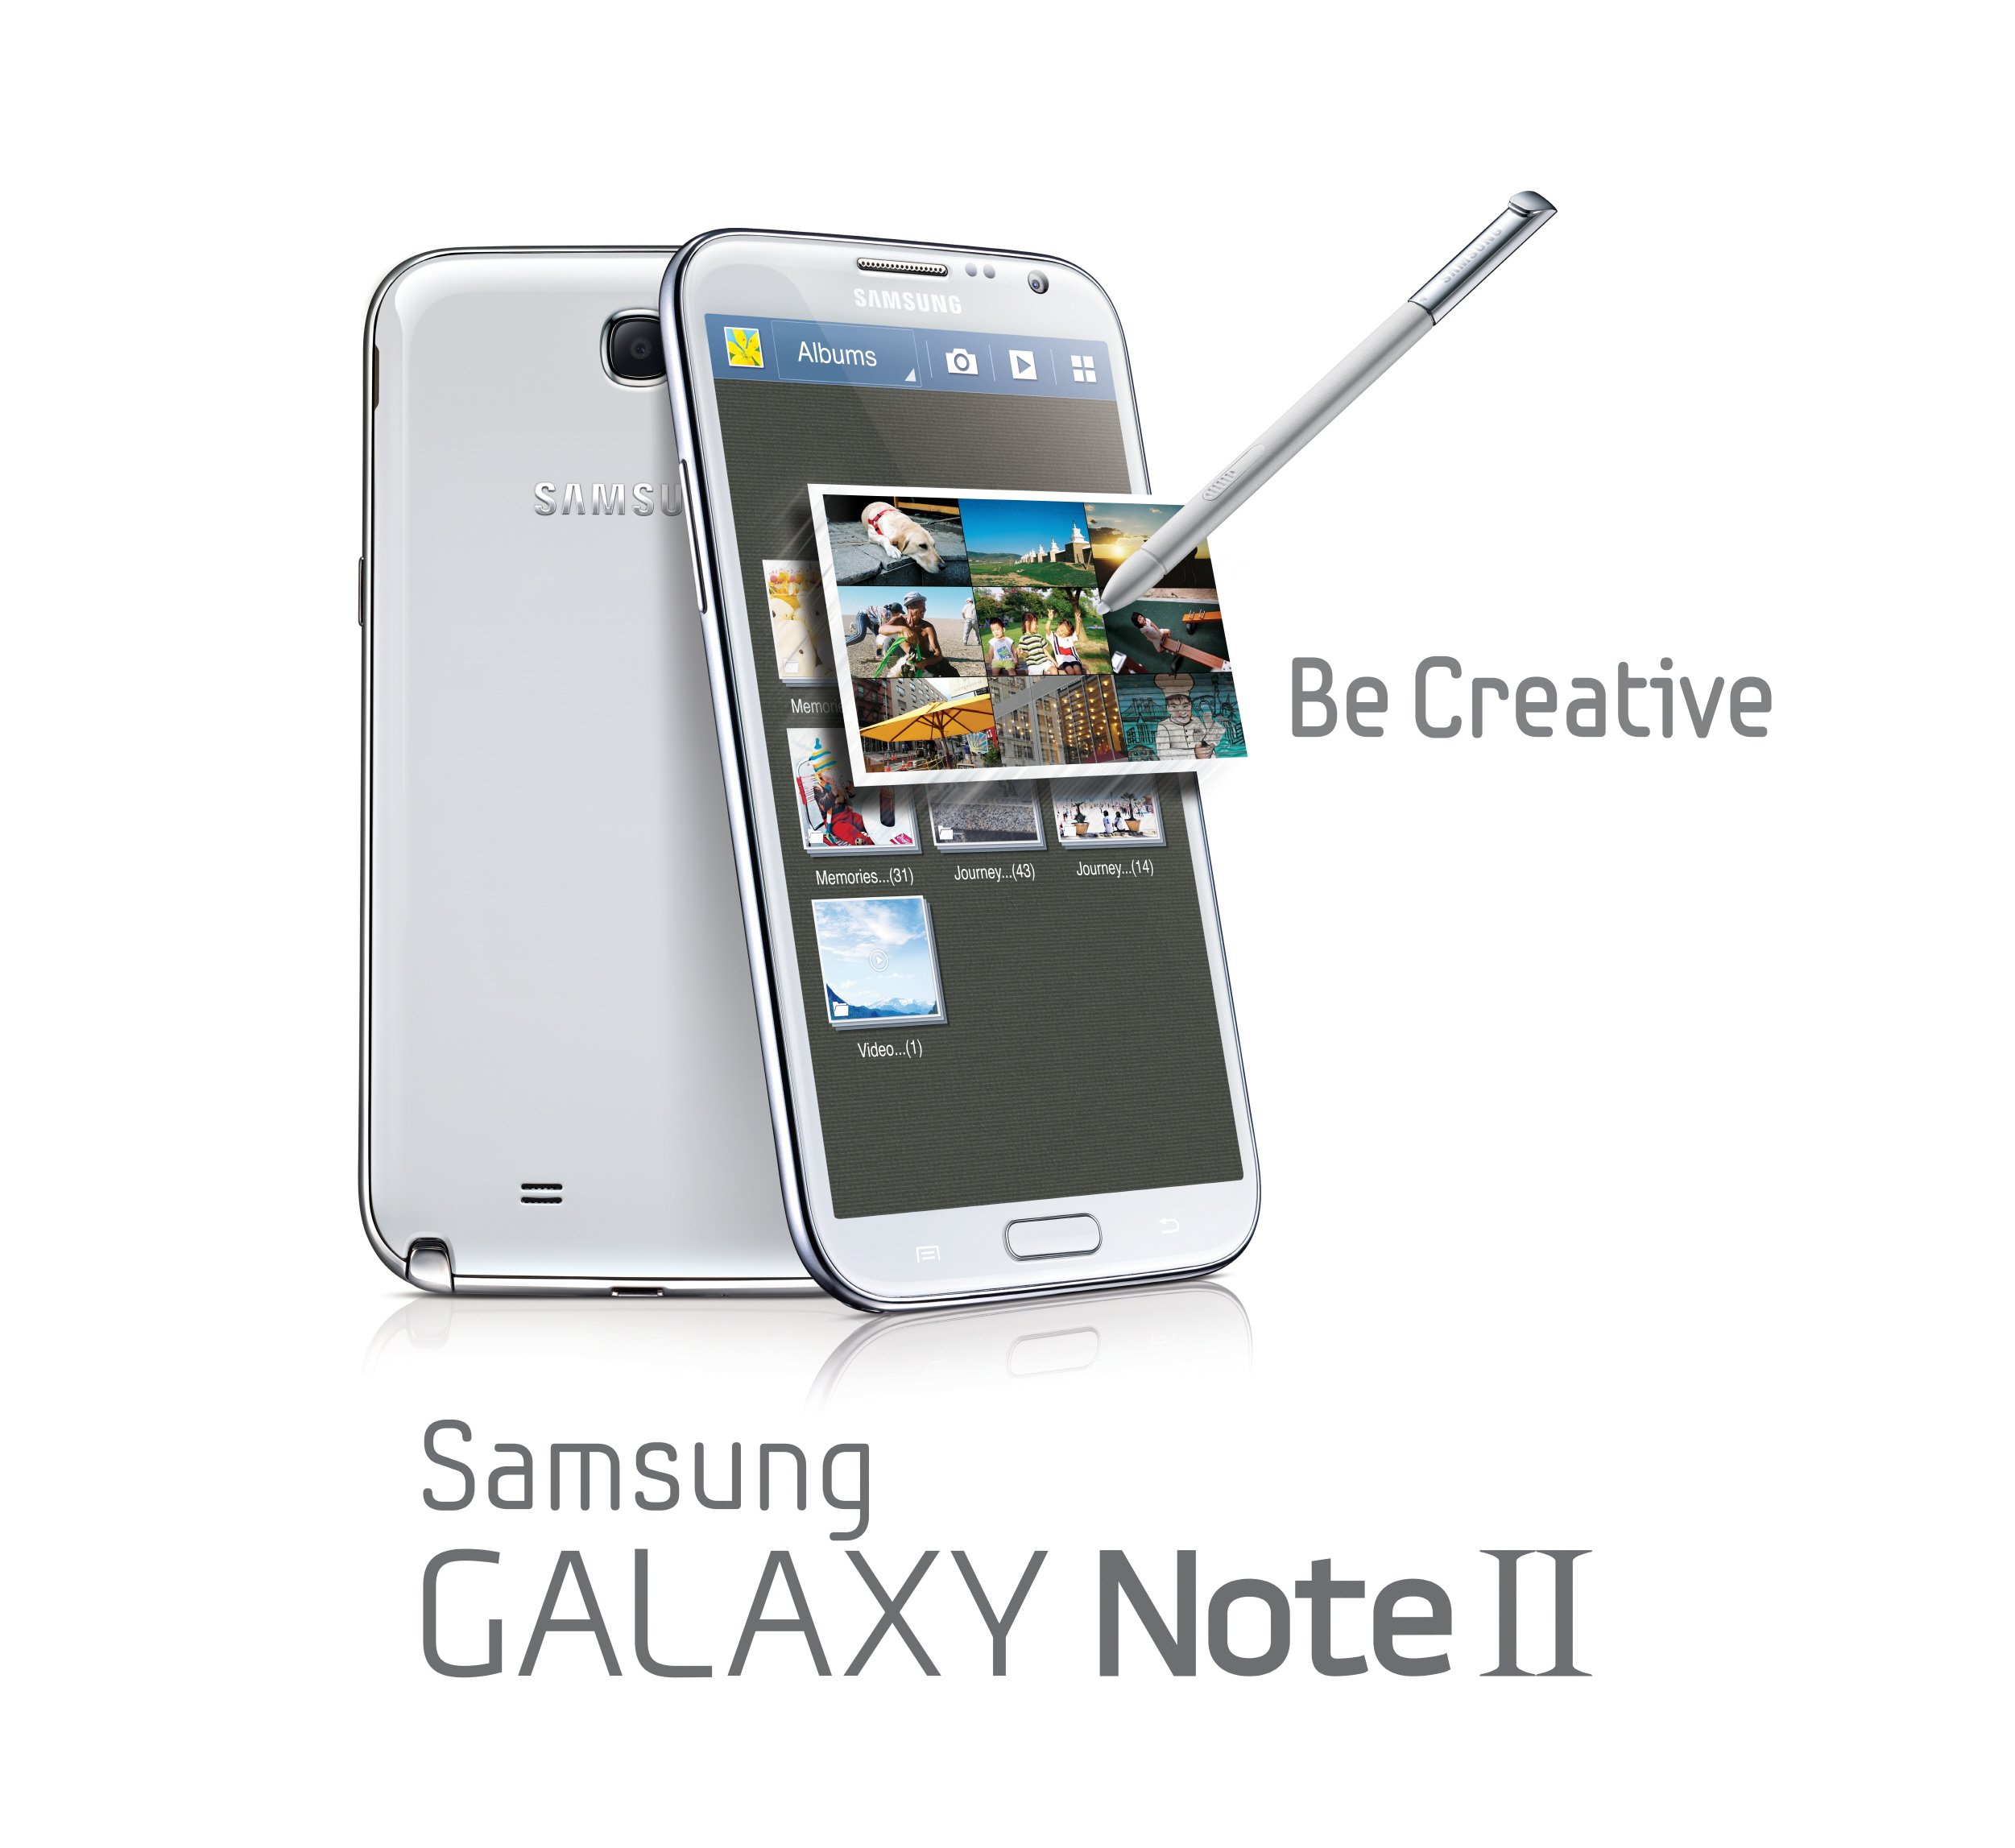 GALAXY Note II Product Image_Key Visual (1)